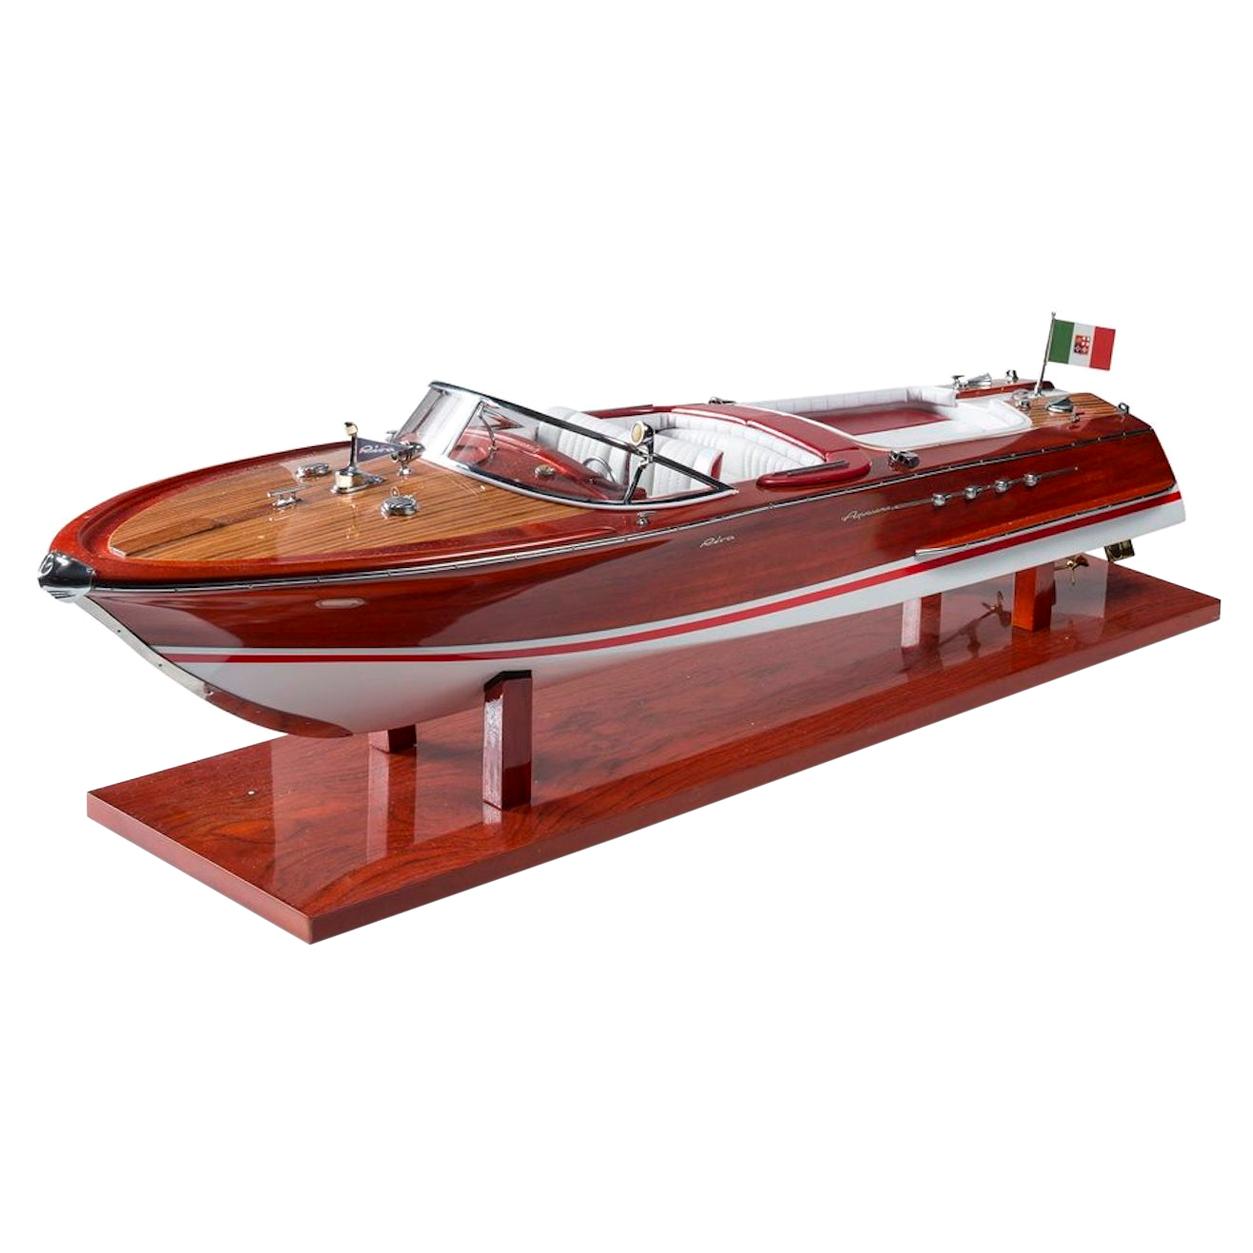 Vintage Model of Riva "Acquarama" Motorboat, Italy, 1980s